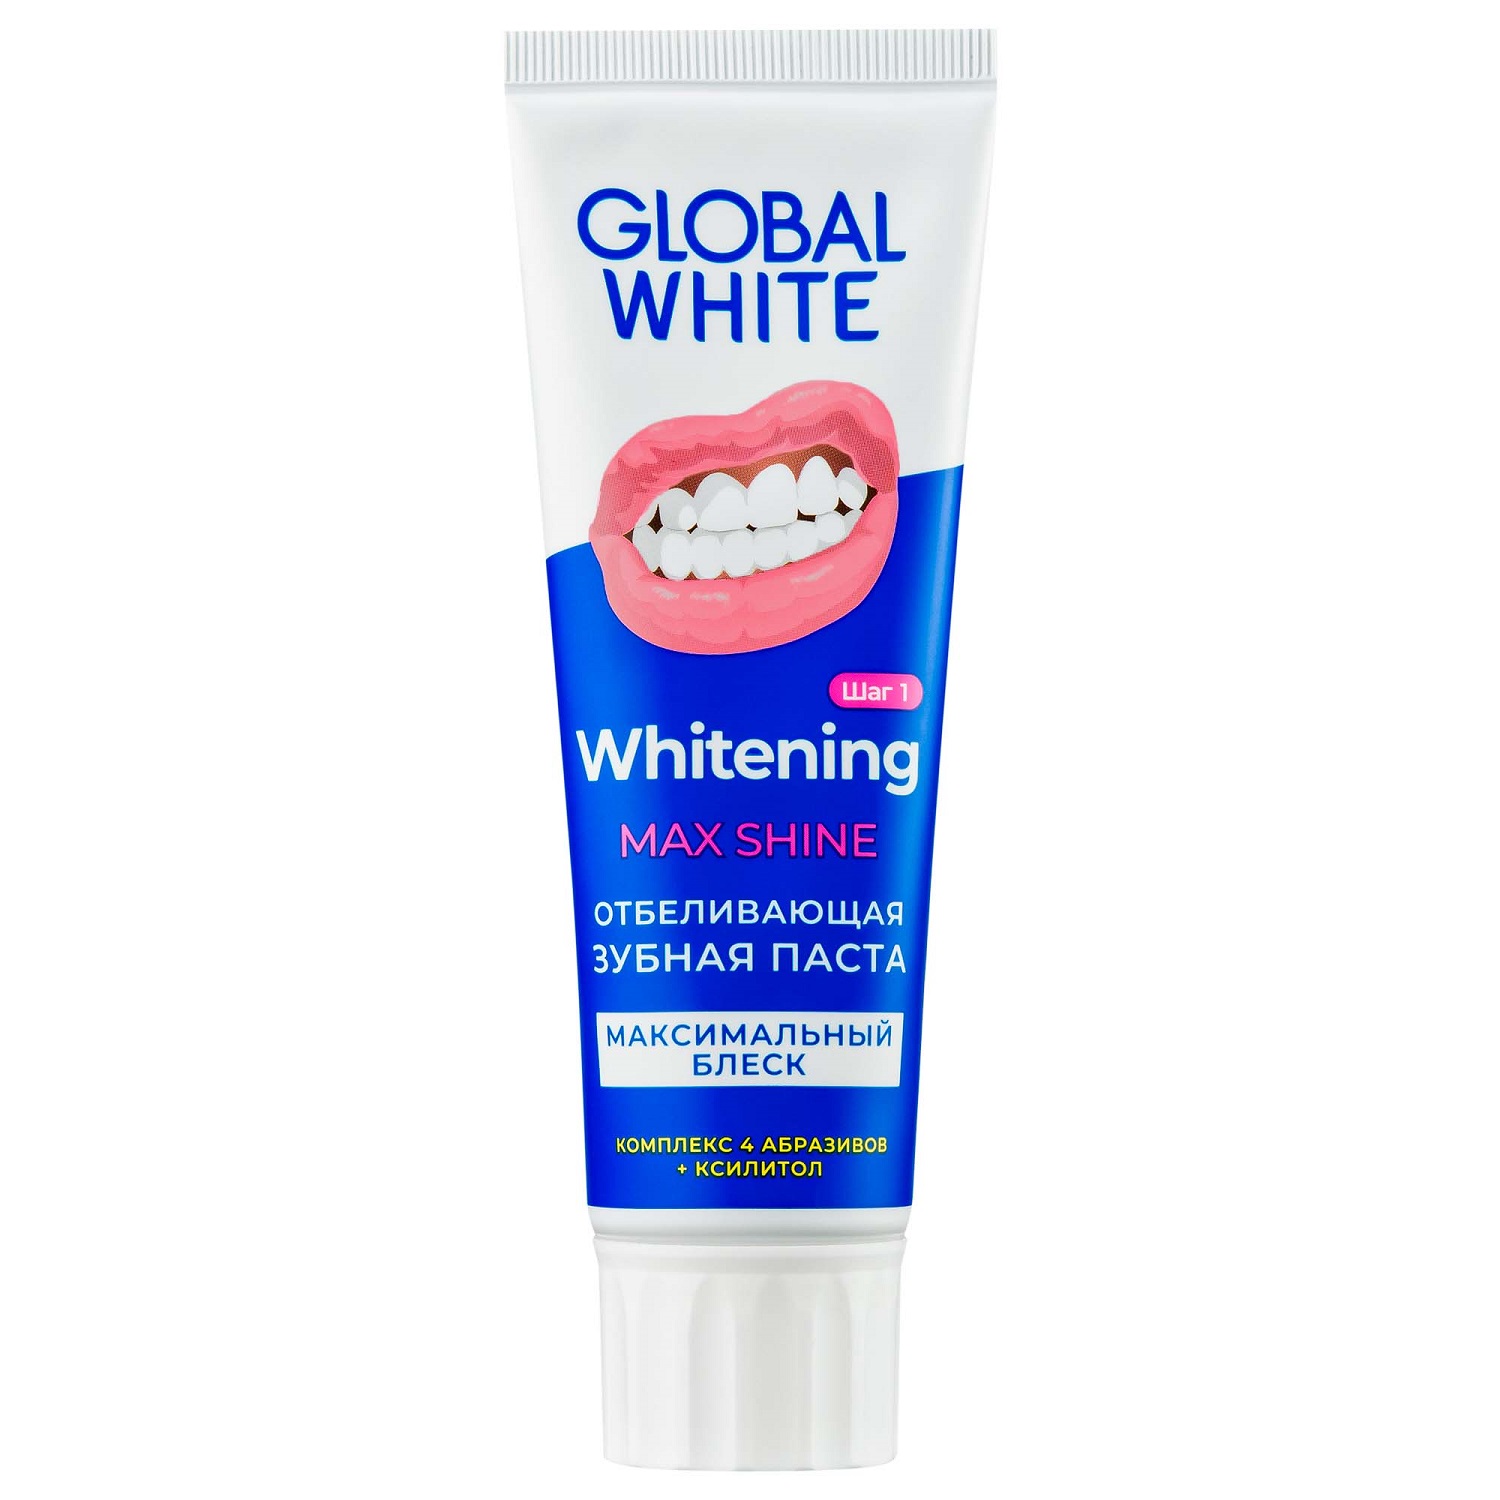 Global White Отбеливающая зубная паста Max Shine, 100 г (Global White, Подготовка к отбеливанию)